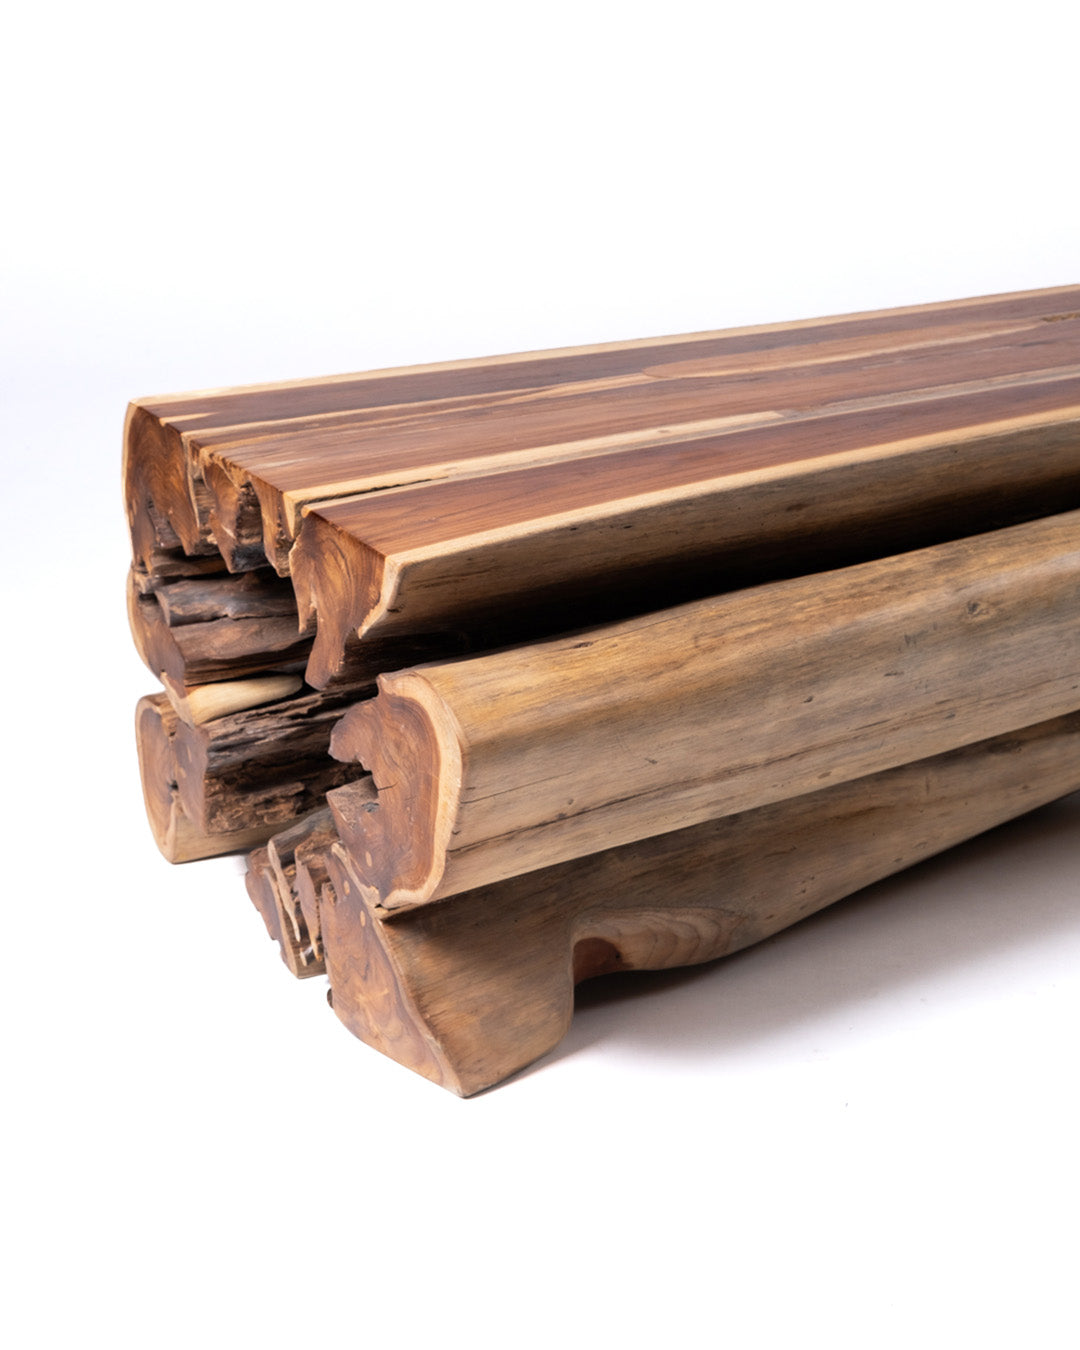 Mesa de centro de tronco madera maciza natural de teca Uner rustico, hecho a mano acabado natural, Largo 218cm x Ancho 80 cm x Alto 50 cm, origen Indonesia